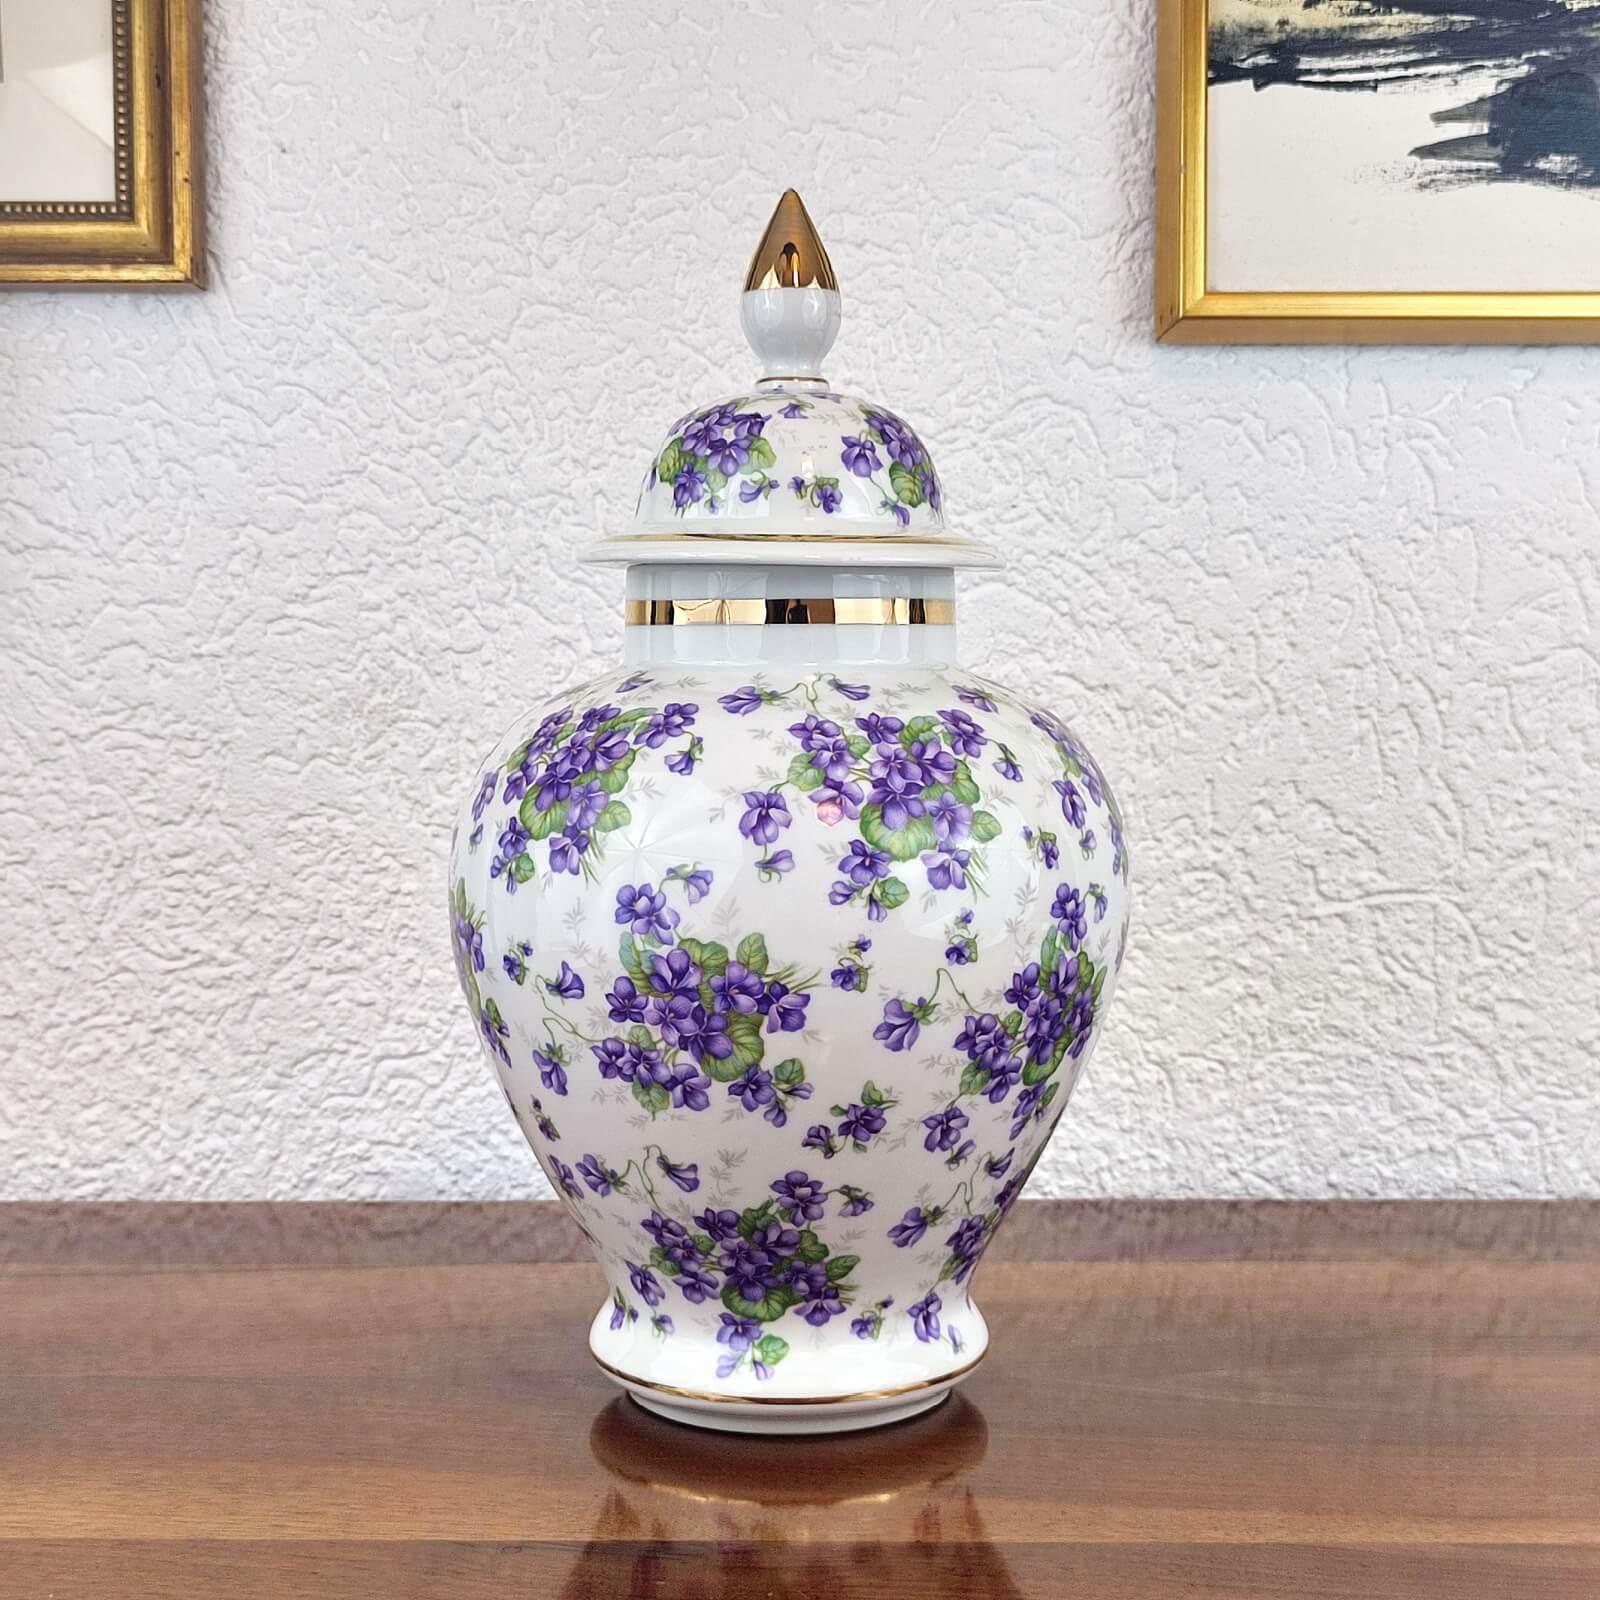 Bavaria Schumann Arzberg lidded urn, 1945
Description:
Rare 1945 porcelain covered jar, decorated with purple bunches of flowers and gilt enhancements. Manufacturer stamp under the bottom.
Creator: Bavaria Schumann Arzberg
Measurements:42 cm